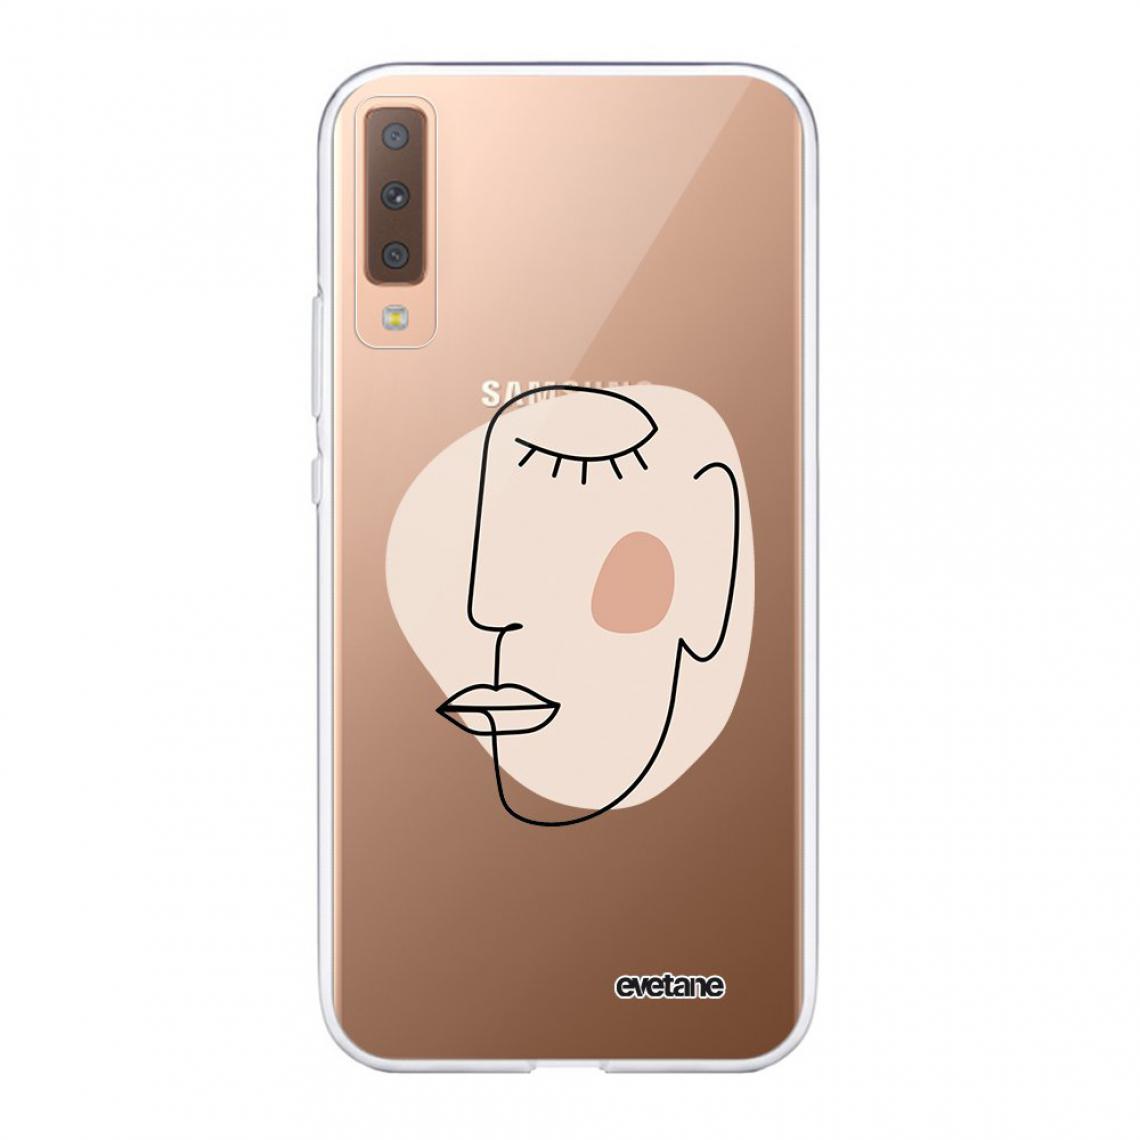 Evetane - Coque Samsung Galaxy A7 2018 360 intégrale avant arrière transparente - Coque, étui smartphone